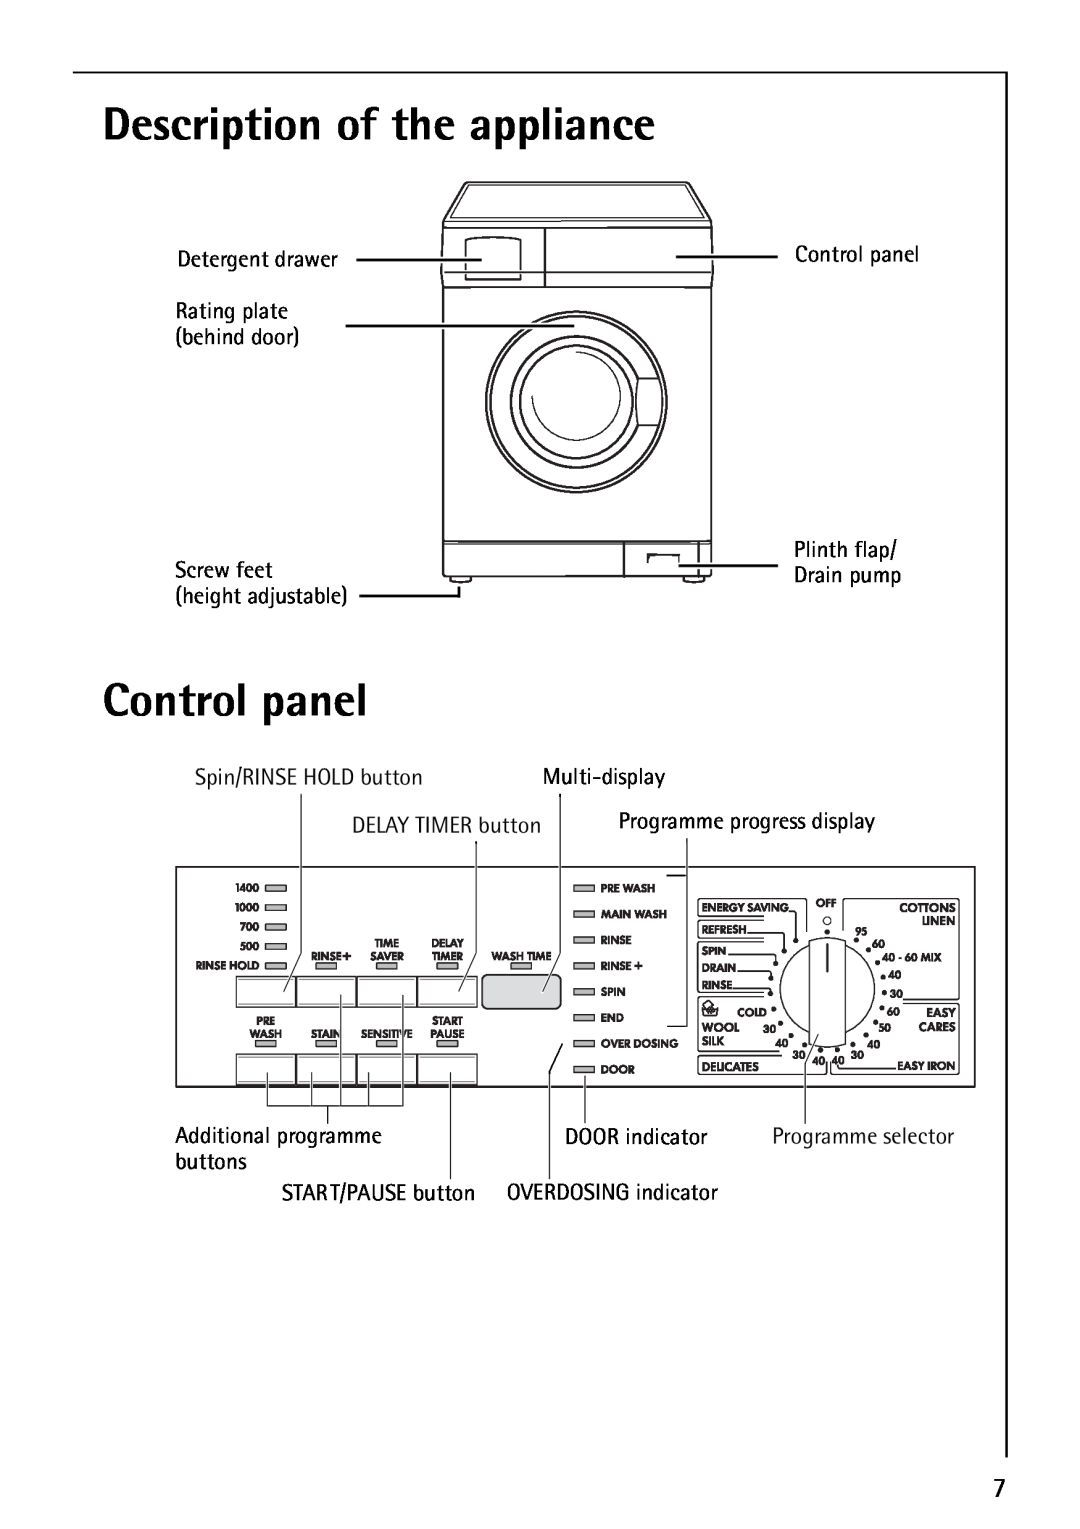 Electrolux LAVAMAT 74700 manual Description of the appliance, Control panel, START/PAUSE button 